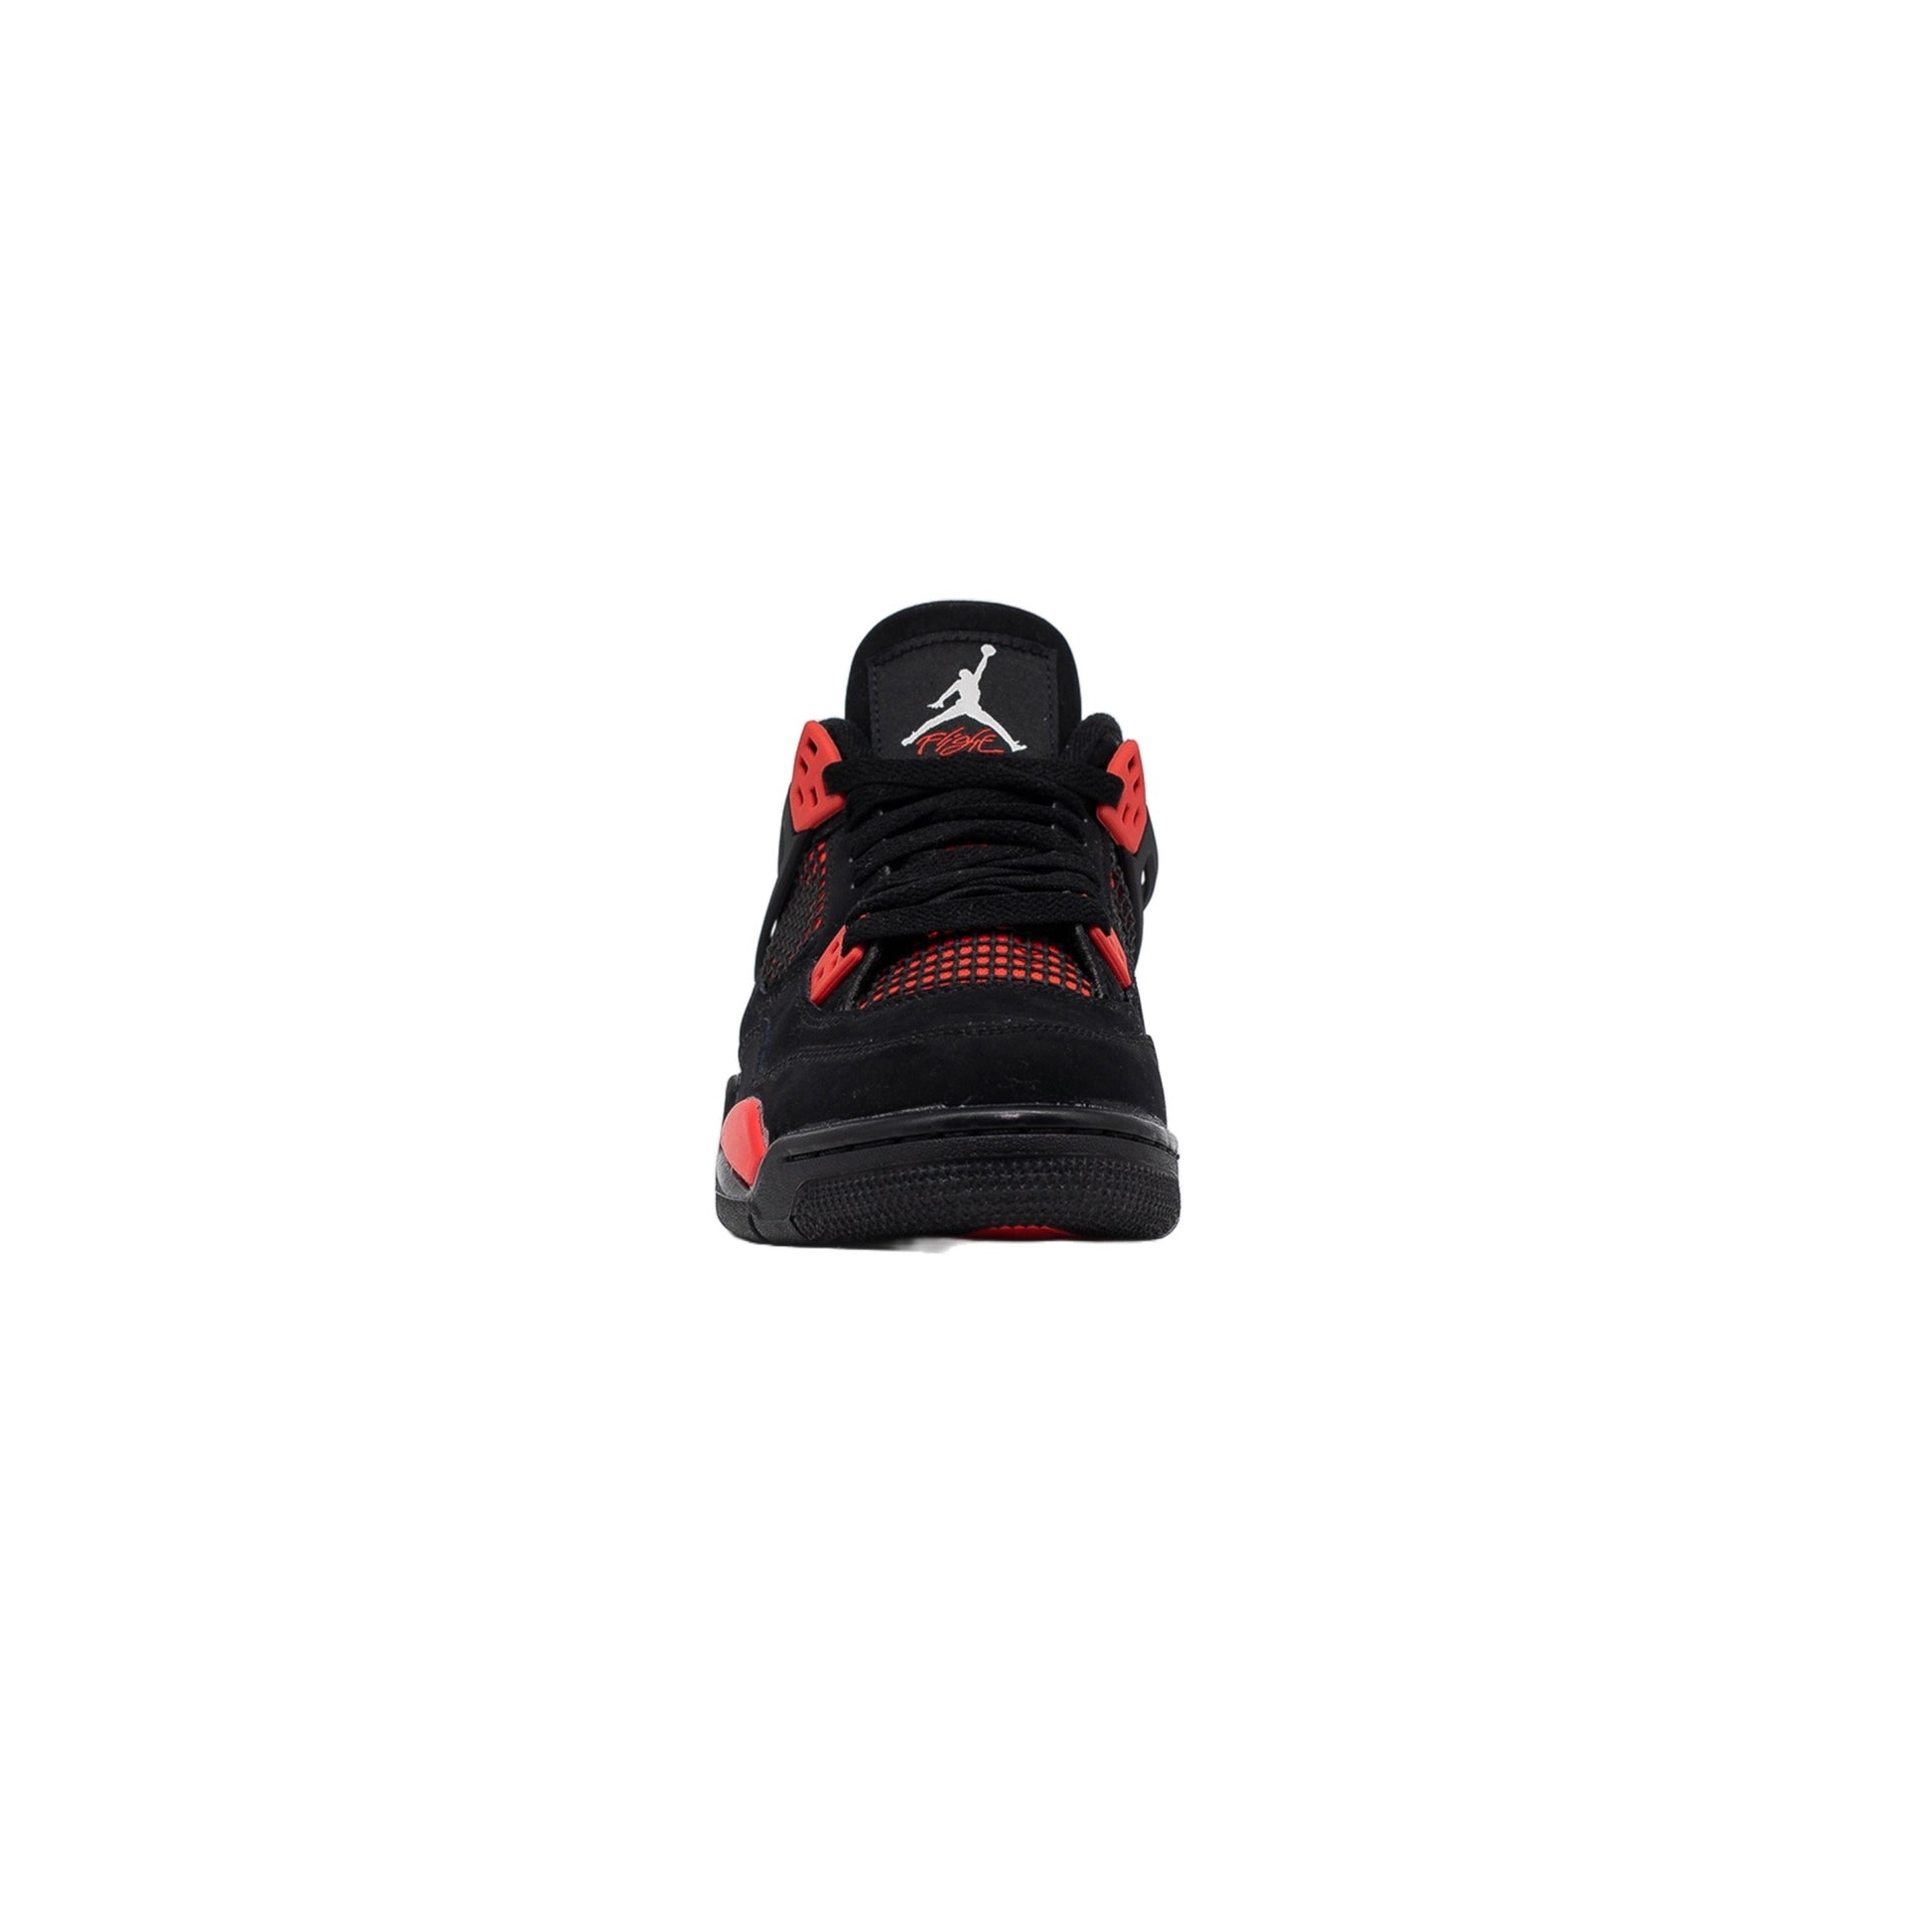 Air Jordan 4, Red Thunder